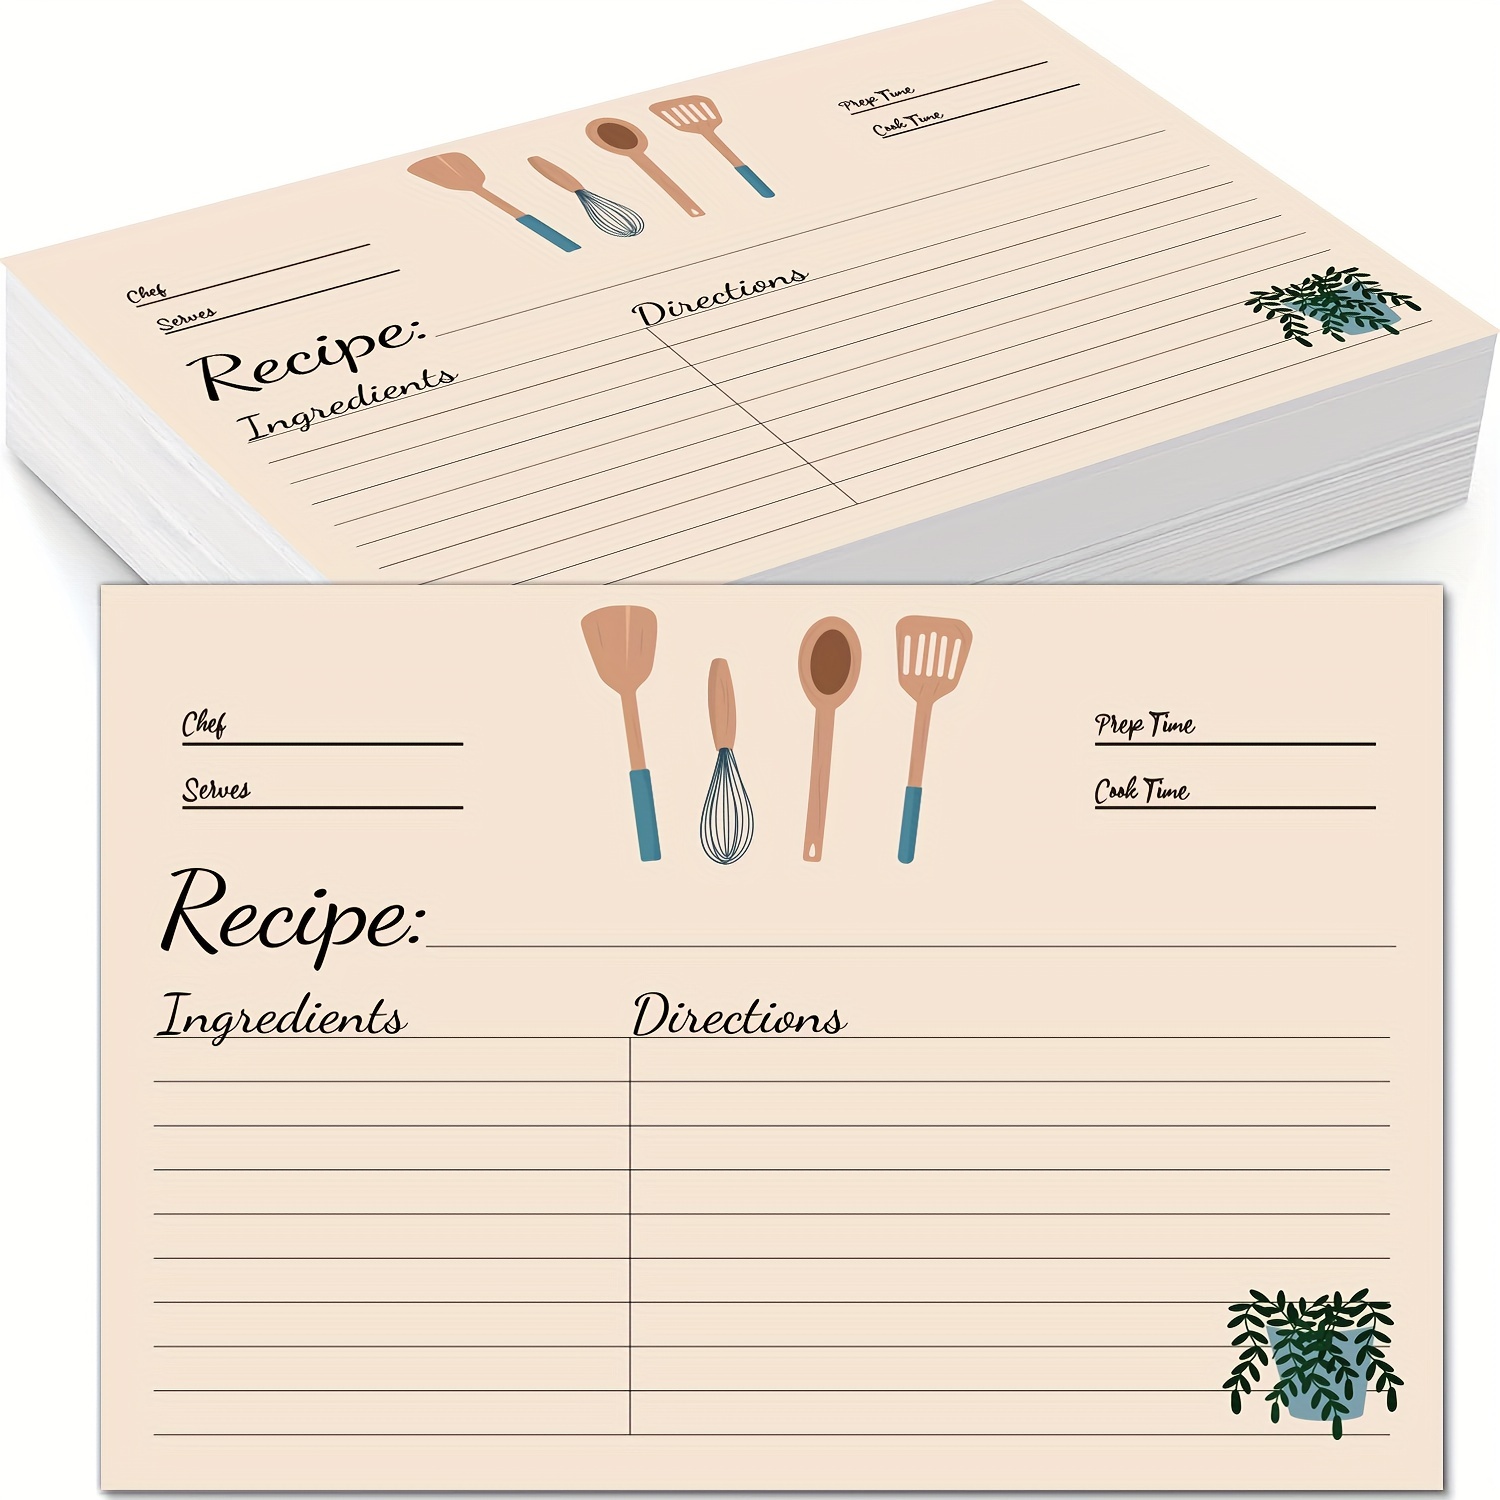 The Keepsake Recipe Book, MADE IN USA